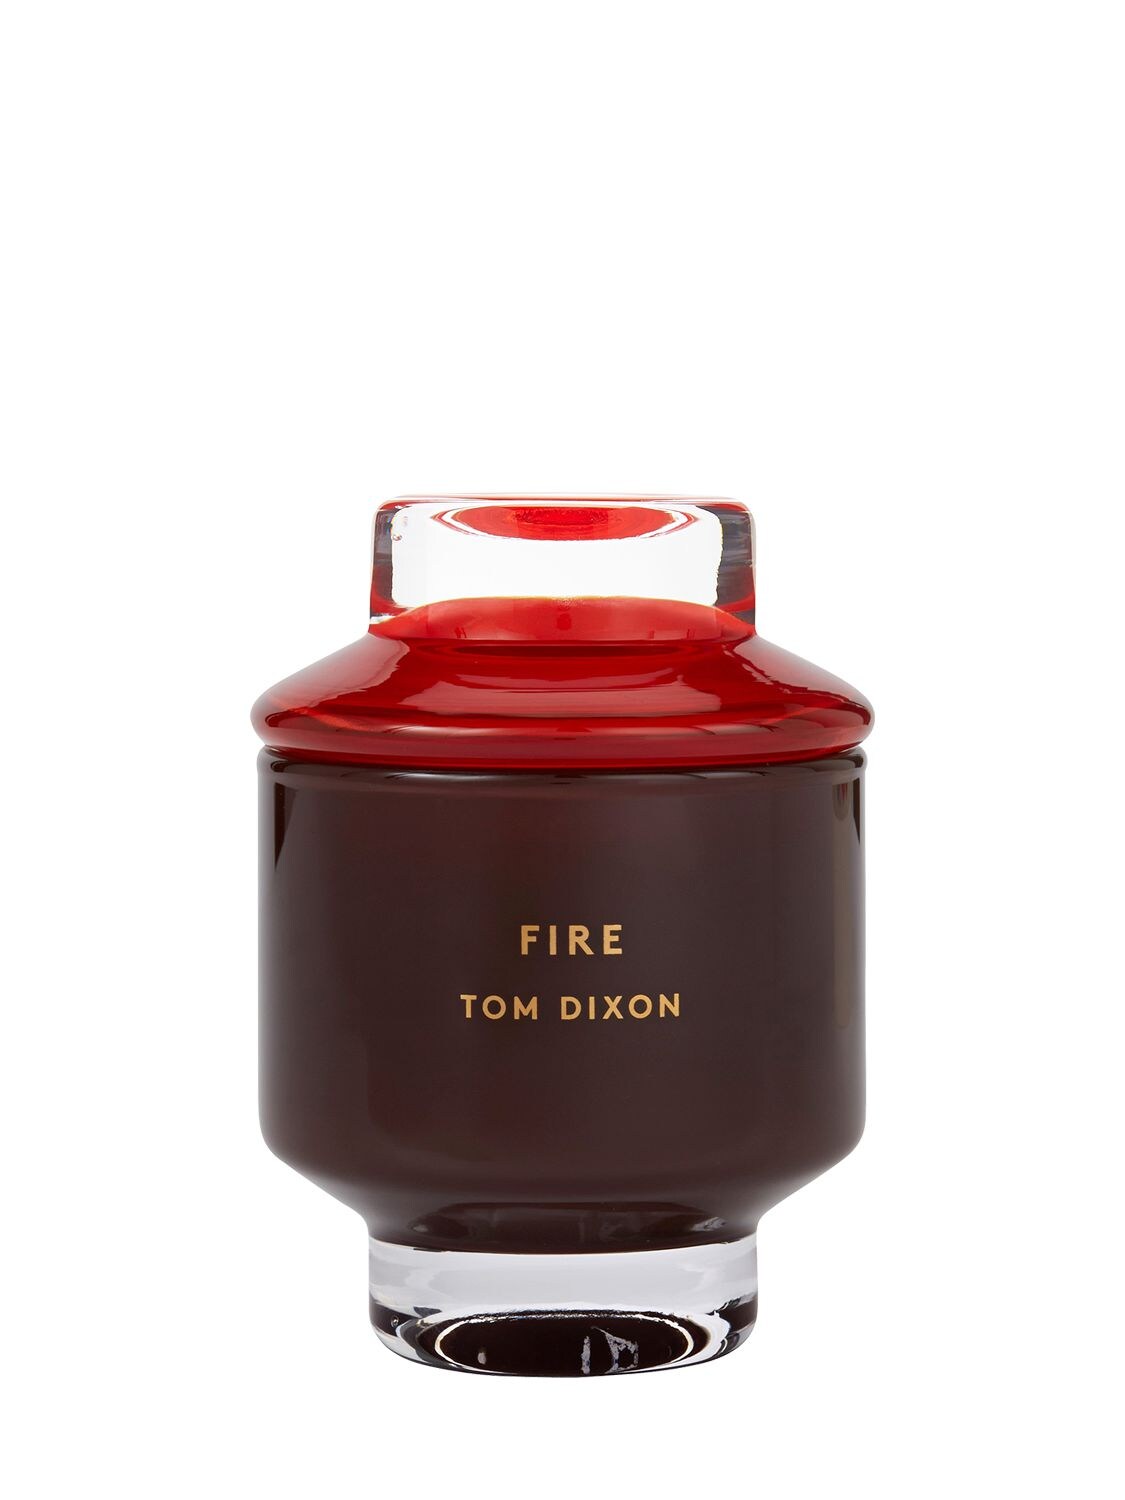 Tom Dixon "fire"香味蜡烛 In Red